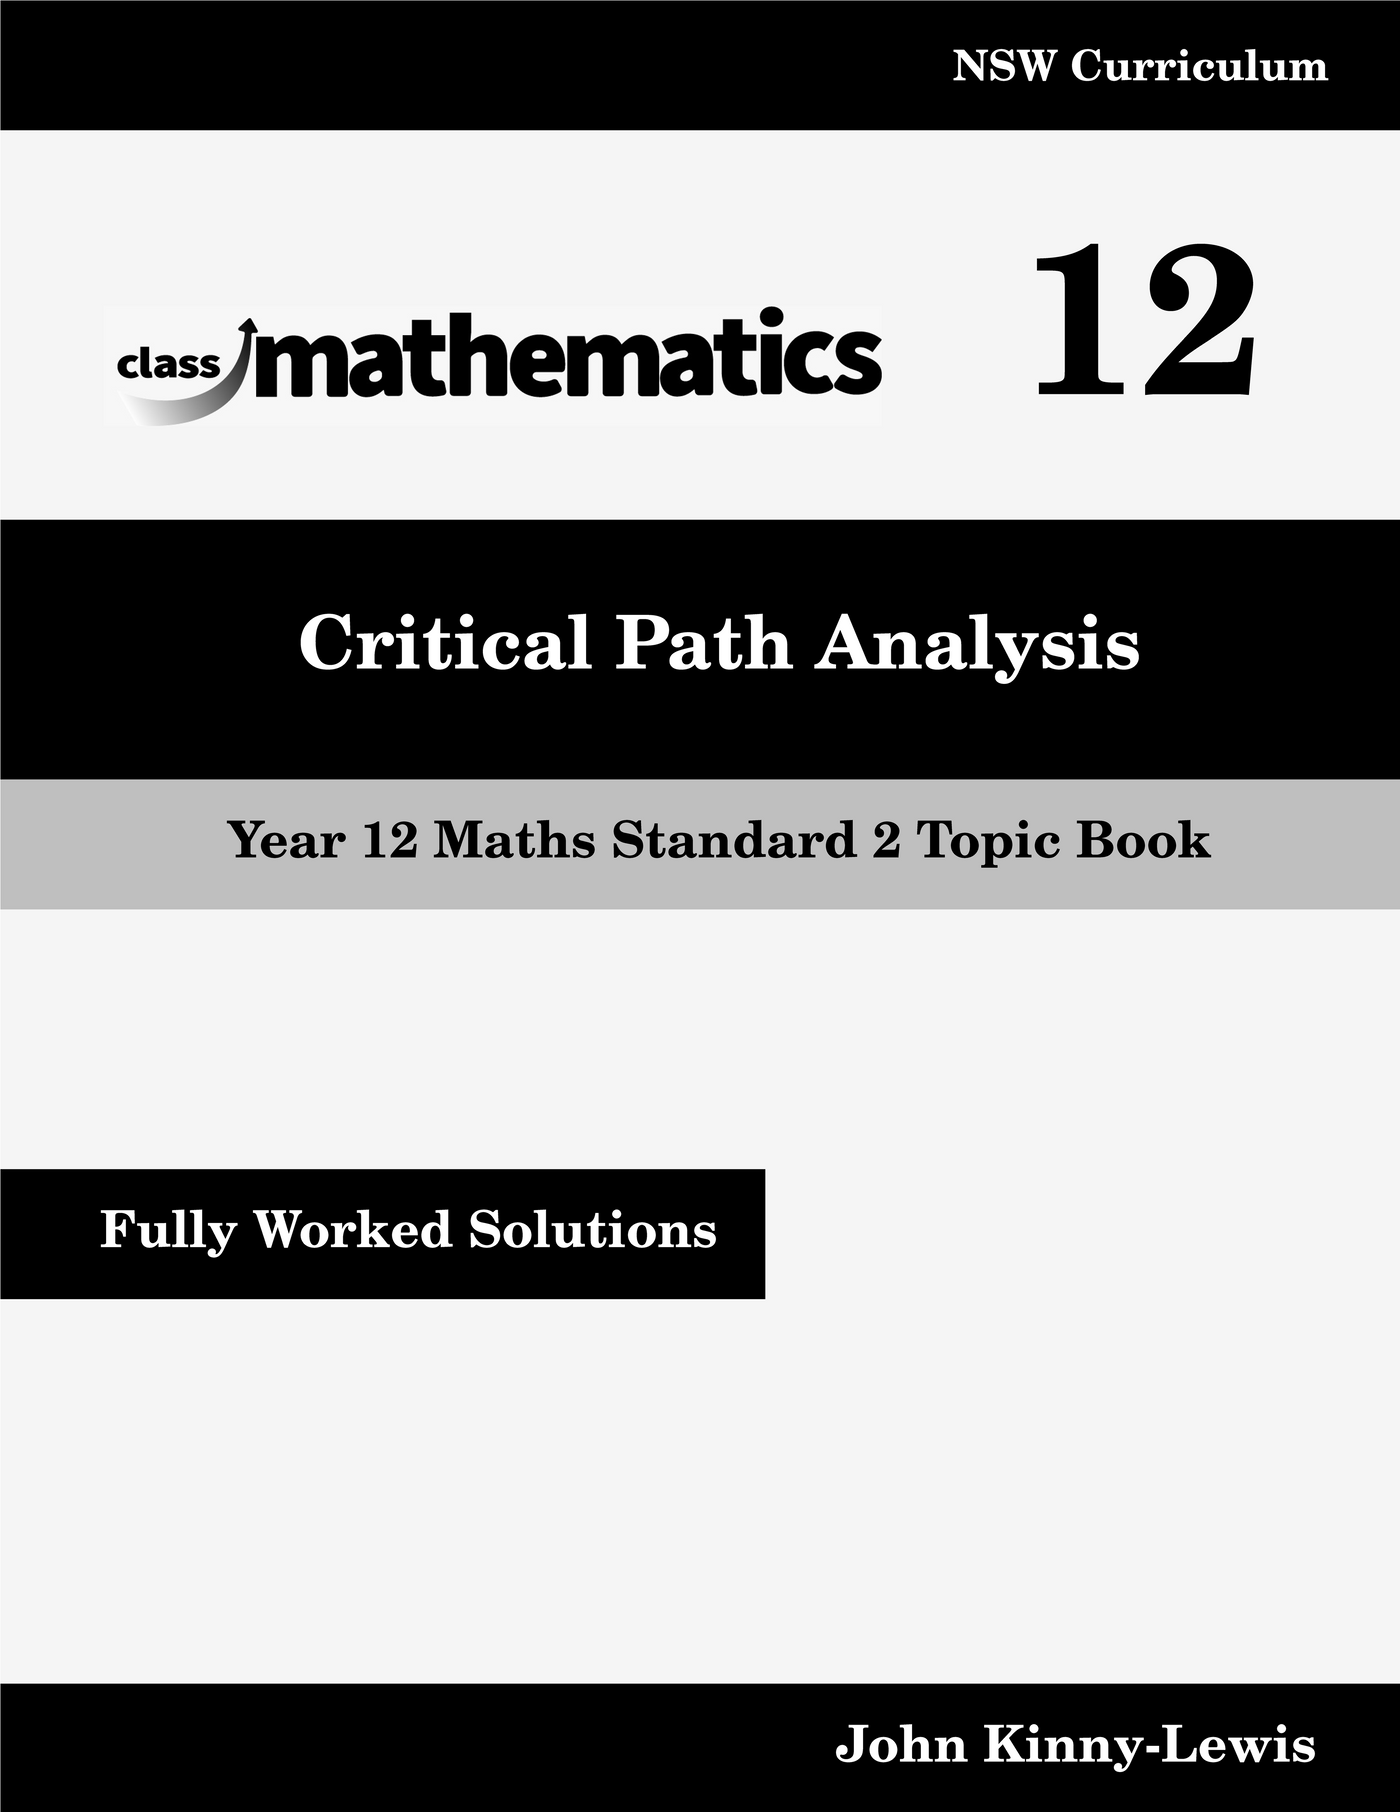 NSW Year 12 Maths Standard 2 - Critical Path Analysis